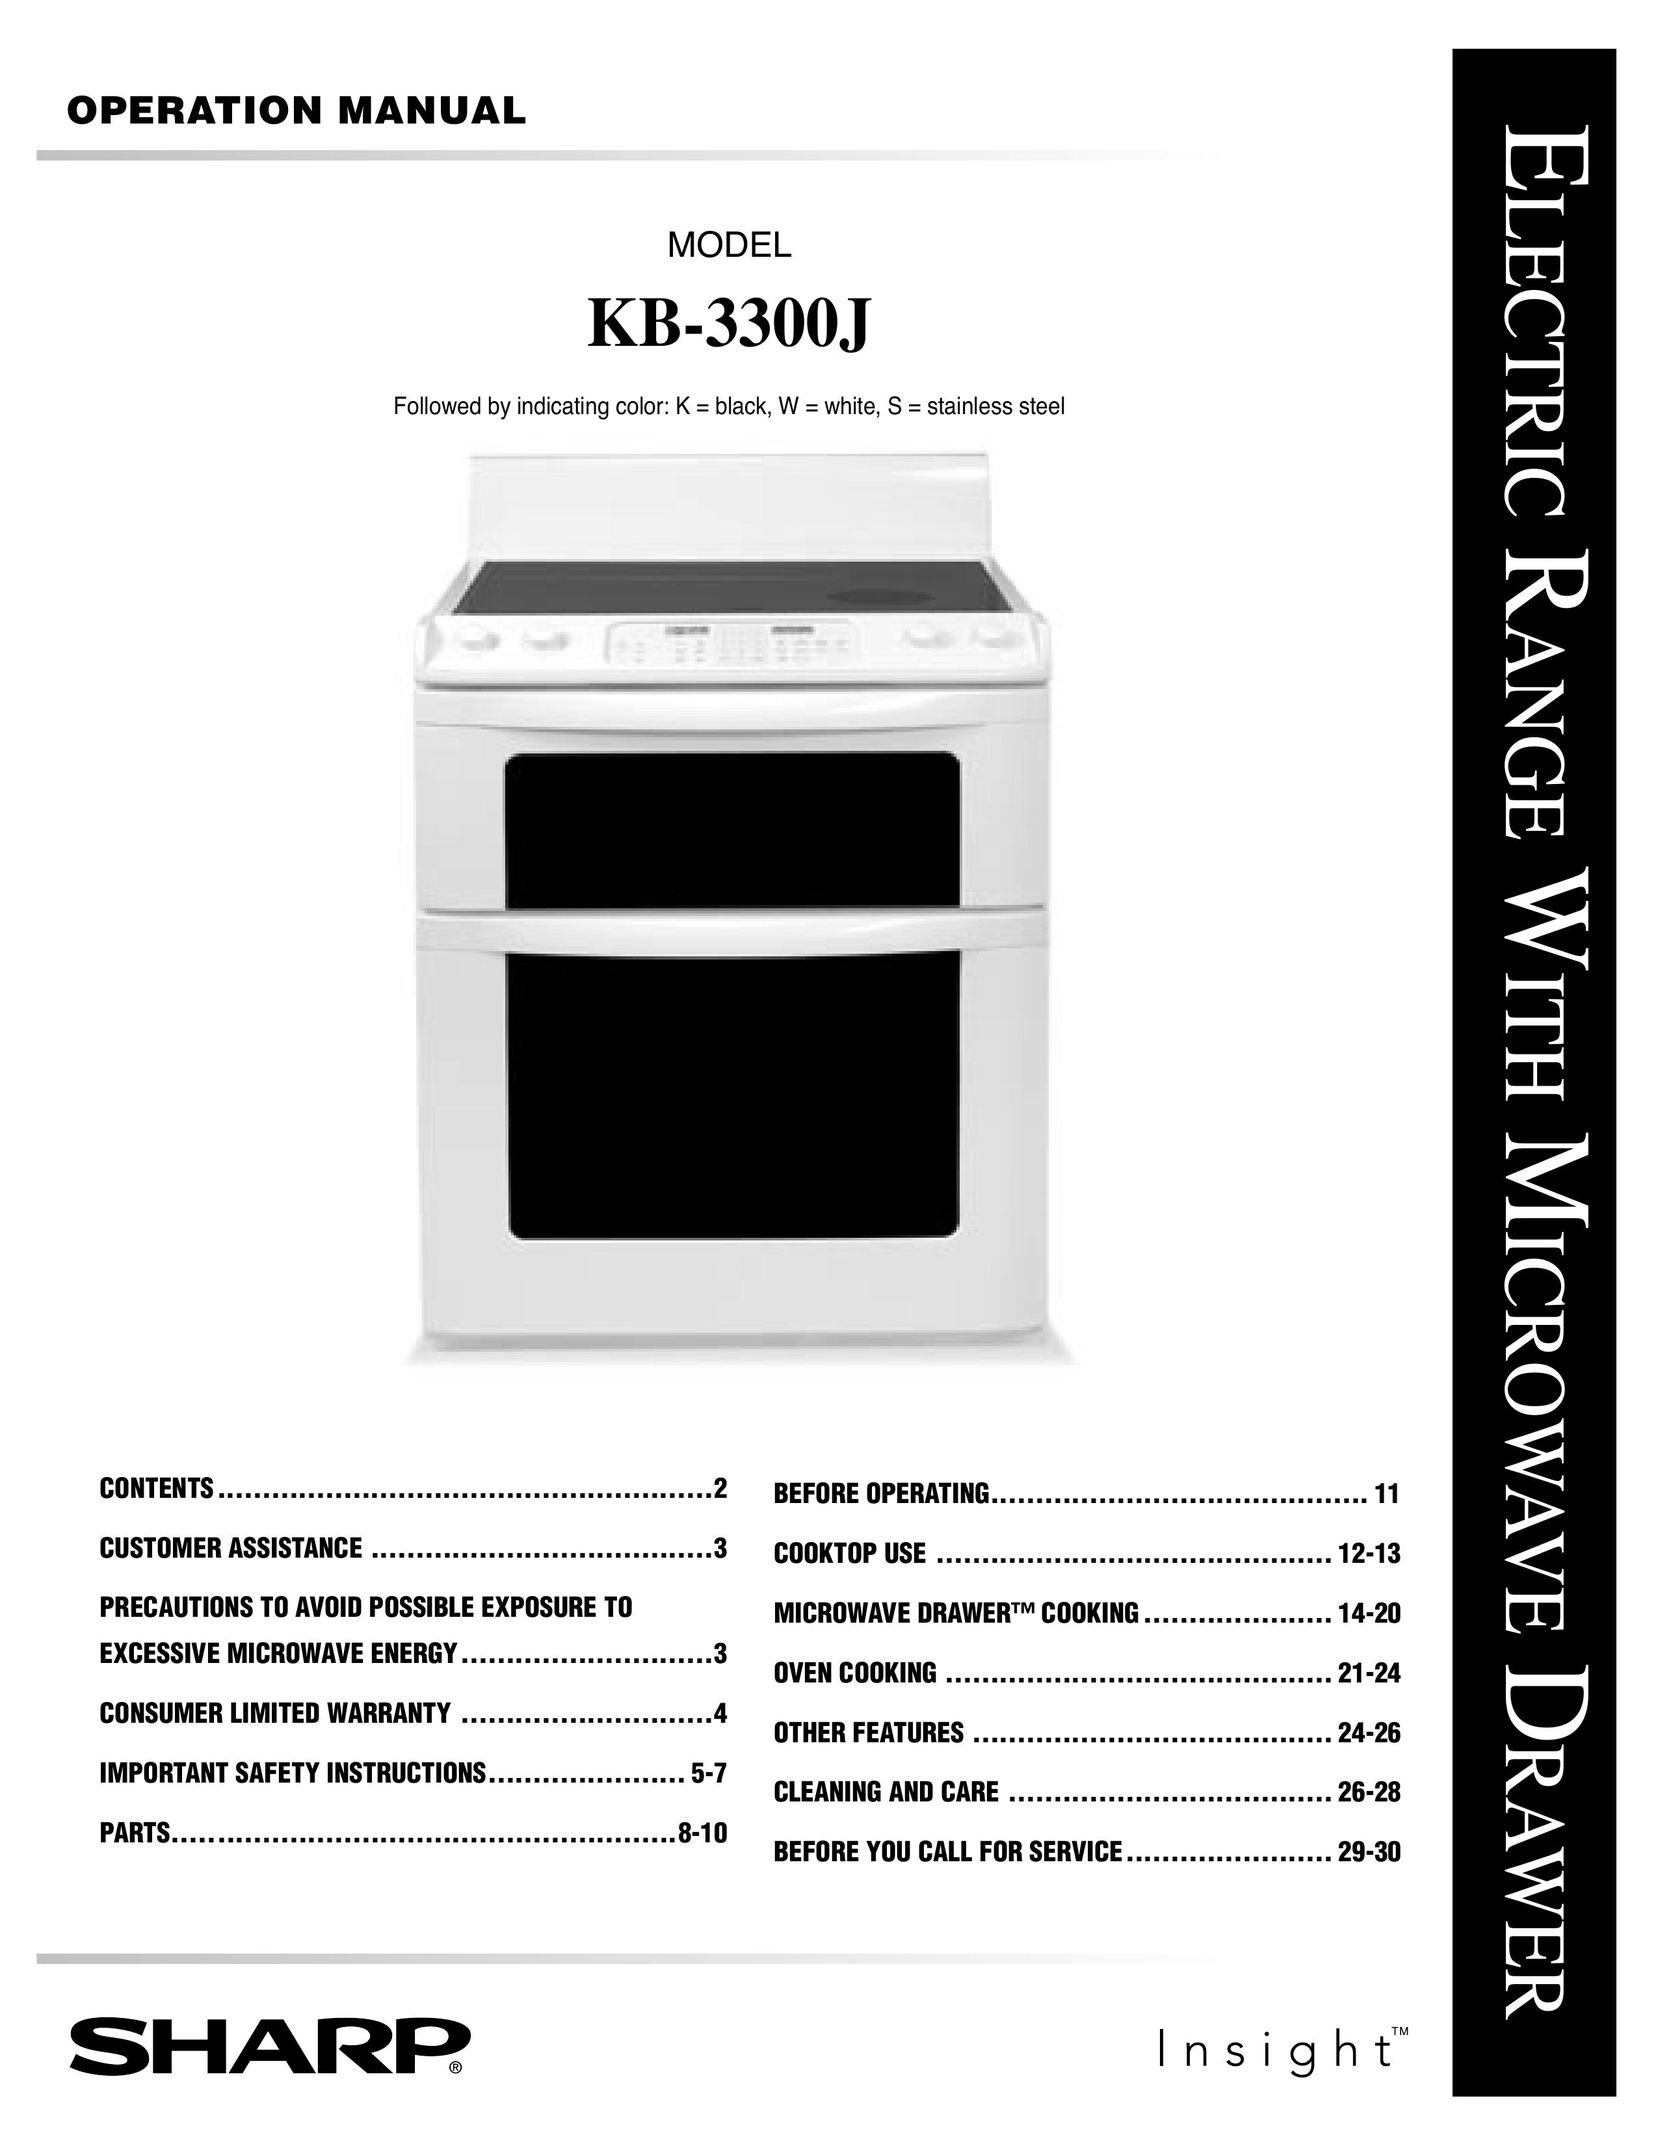 Sharp KB-3300JW Range User Manual